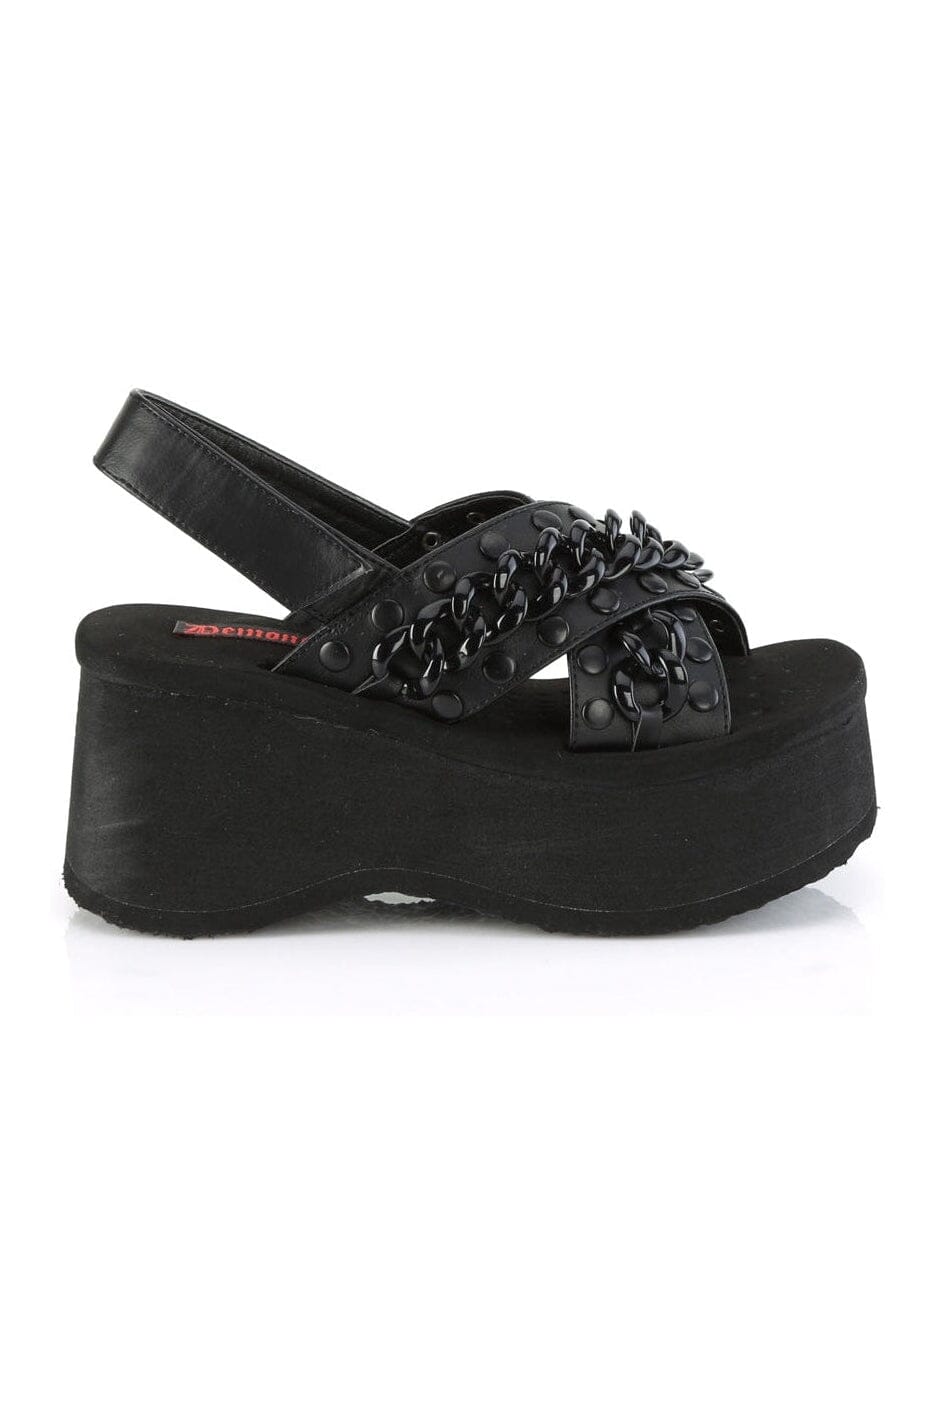 FUNN-12 Black Vegan Leather Sandal-Sandals-Demonia-SEXYSHOES.COM